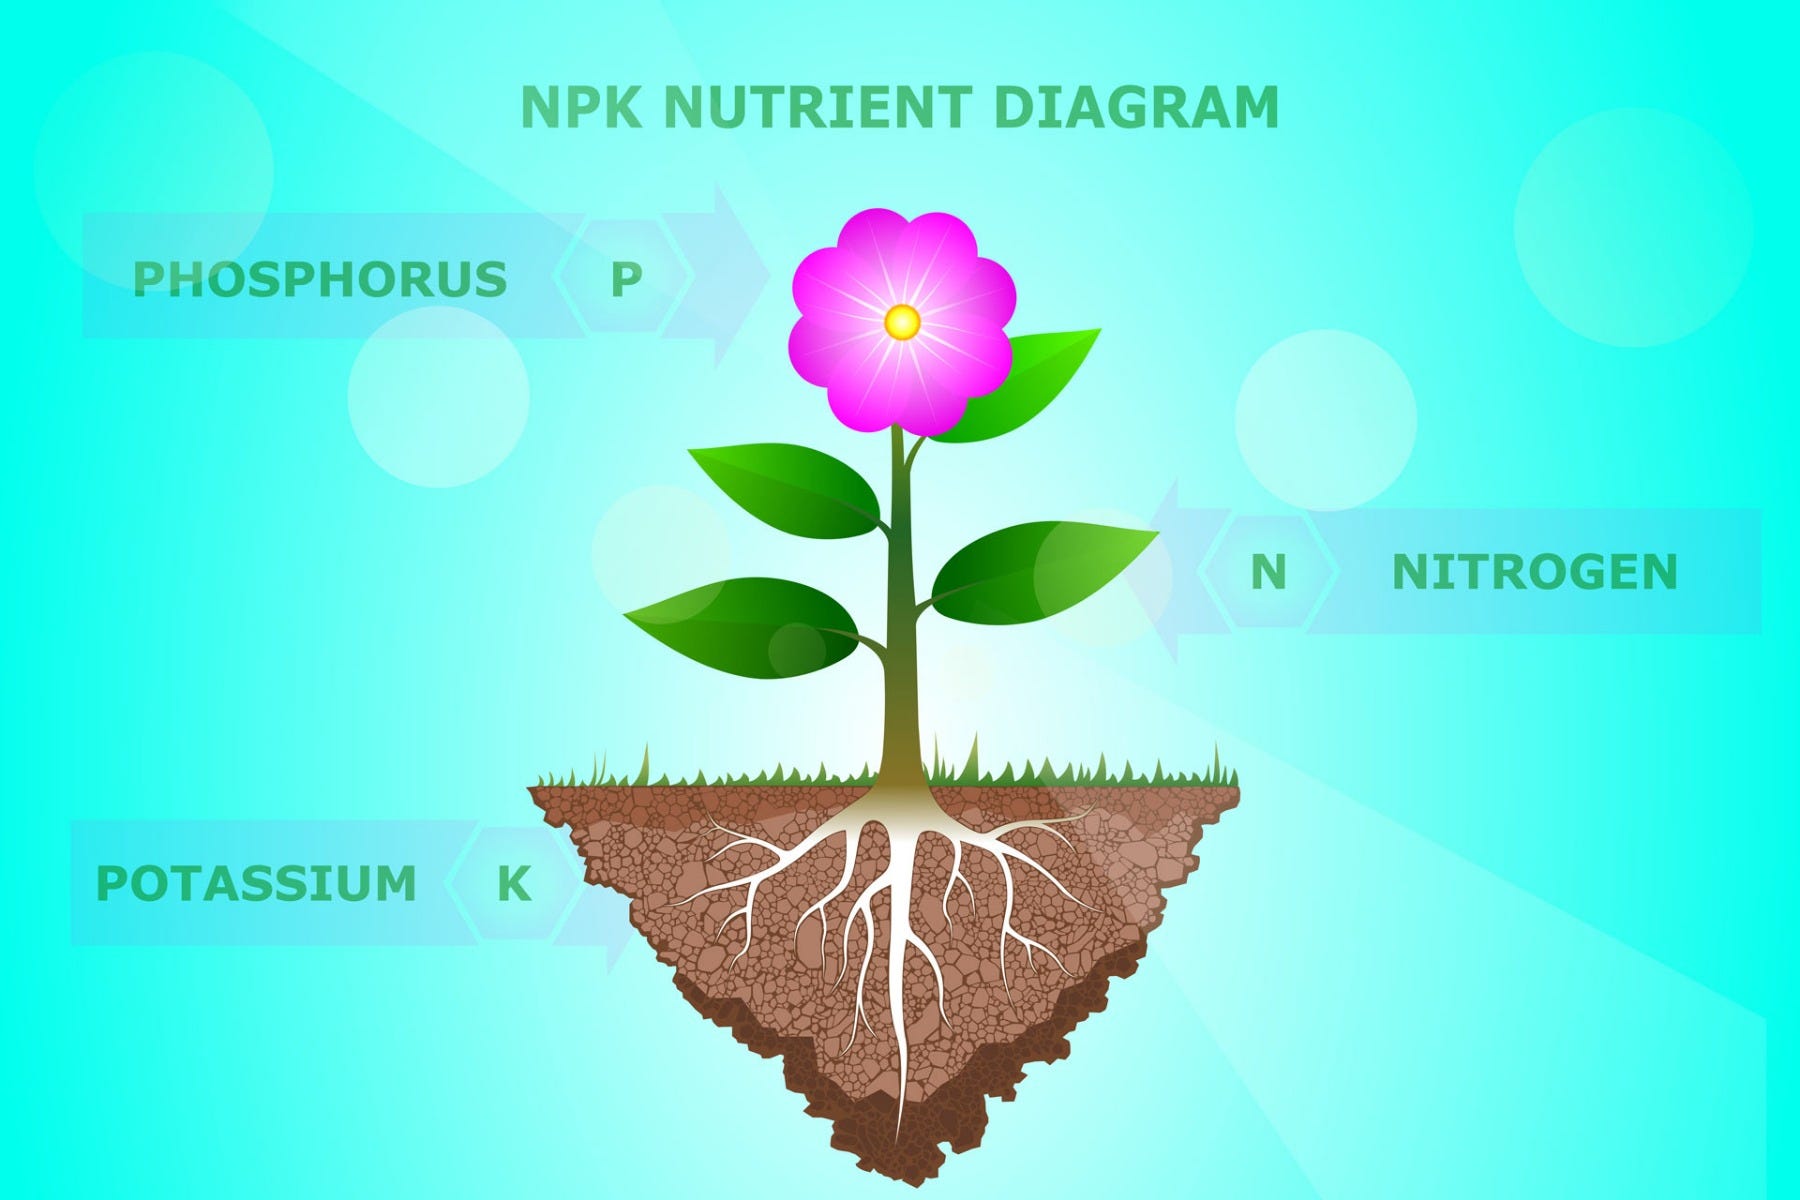 NPK meaning